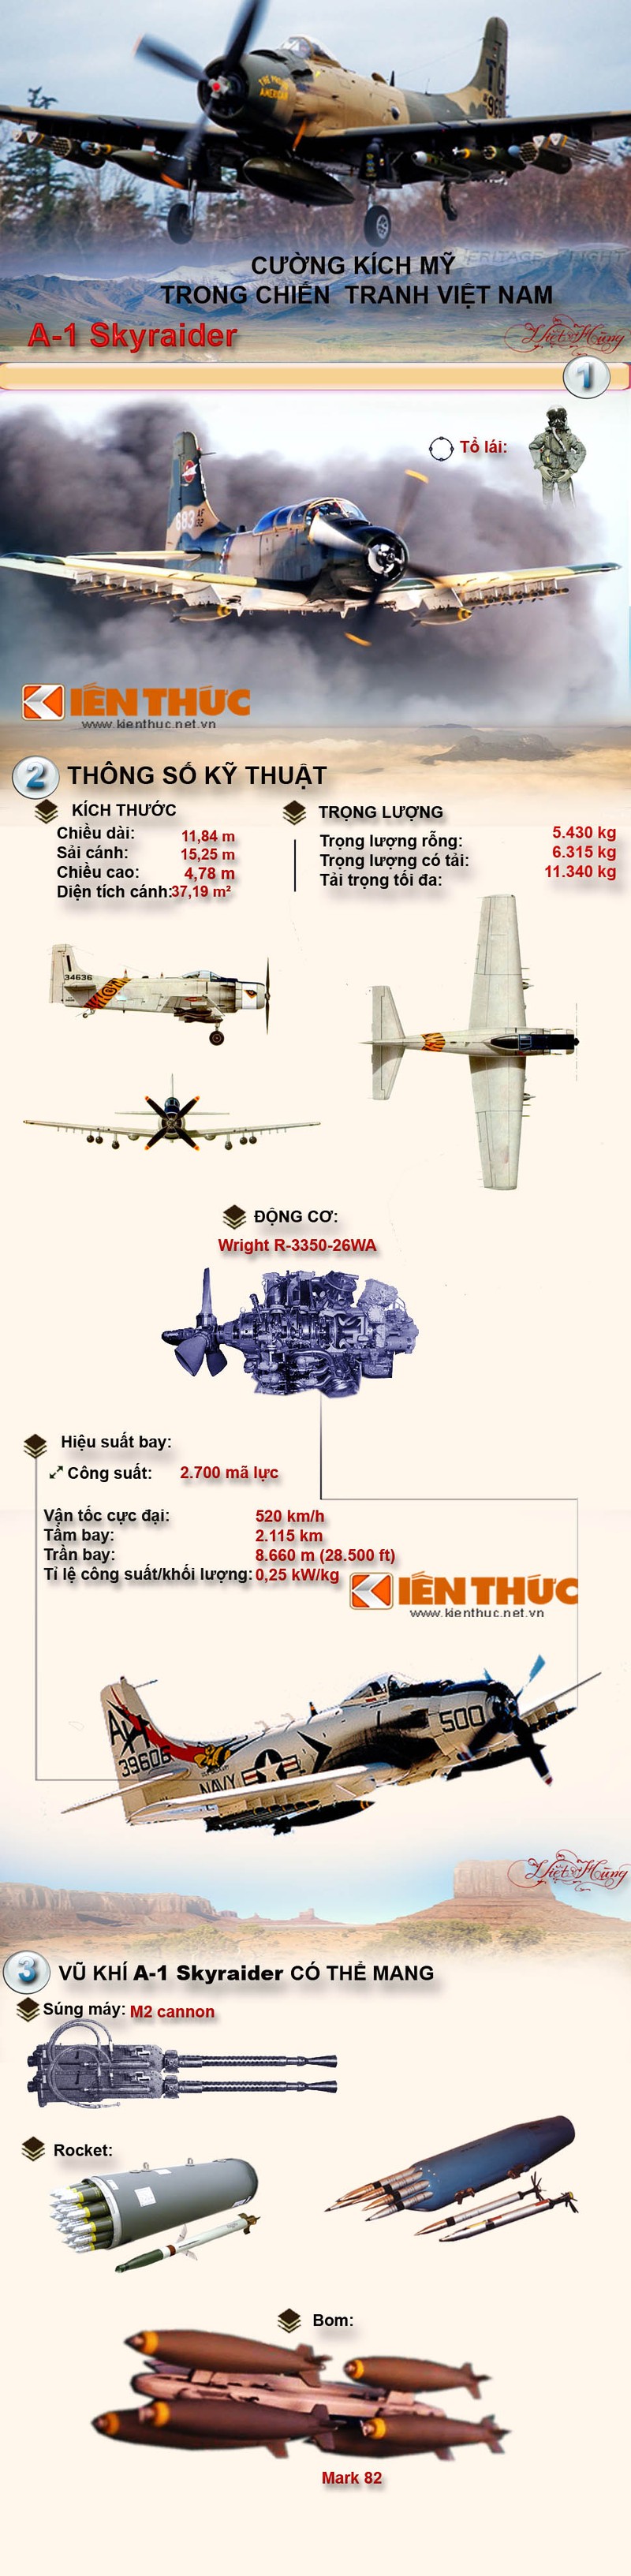 Infographic: Kham pha “giac nha troi” trong Chien tranh Viet Nam